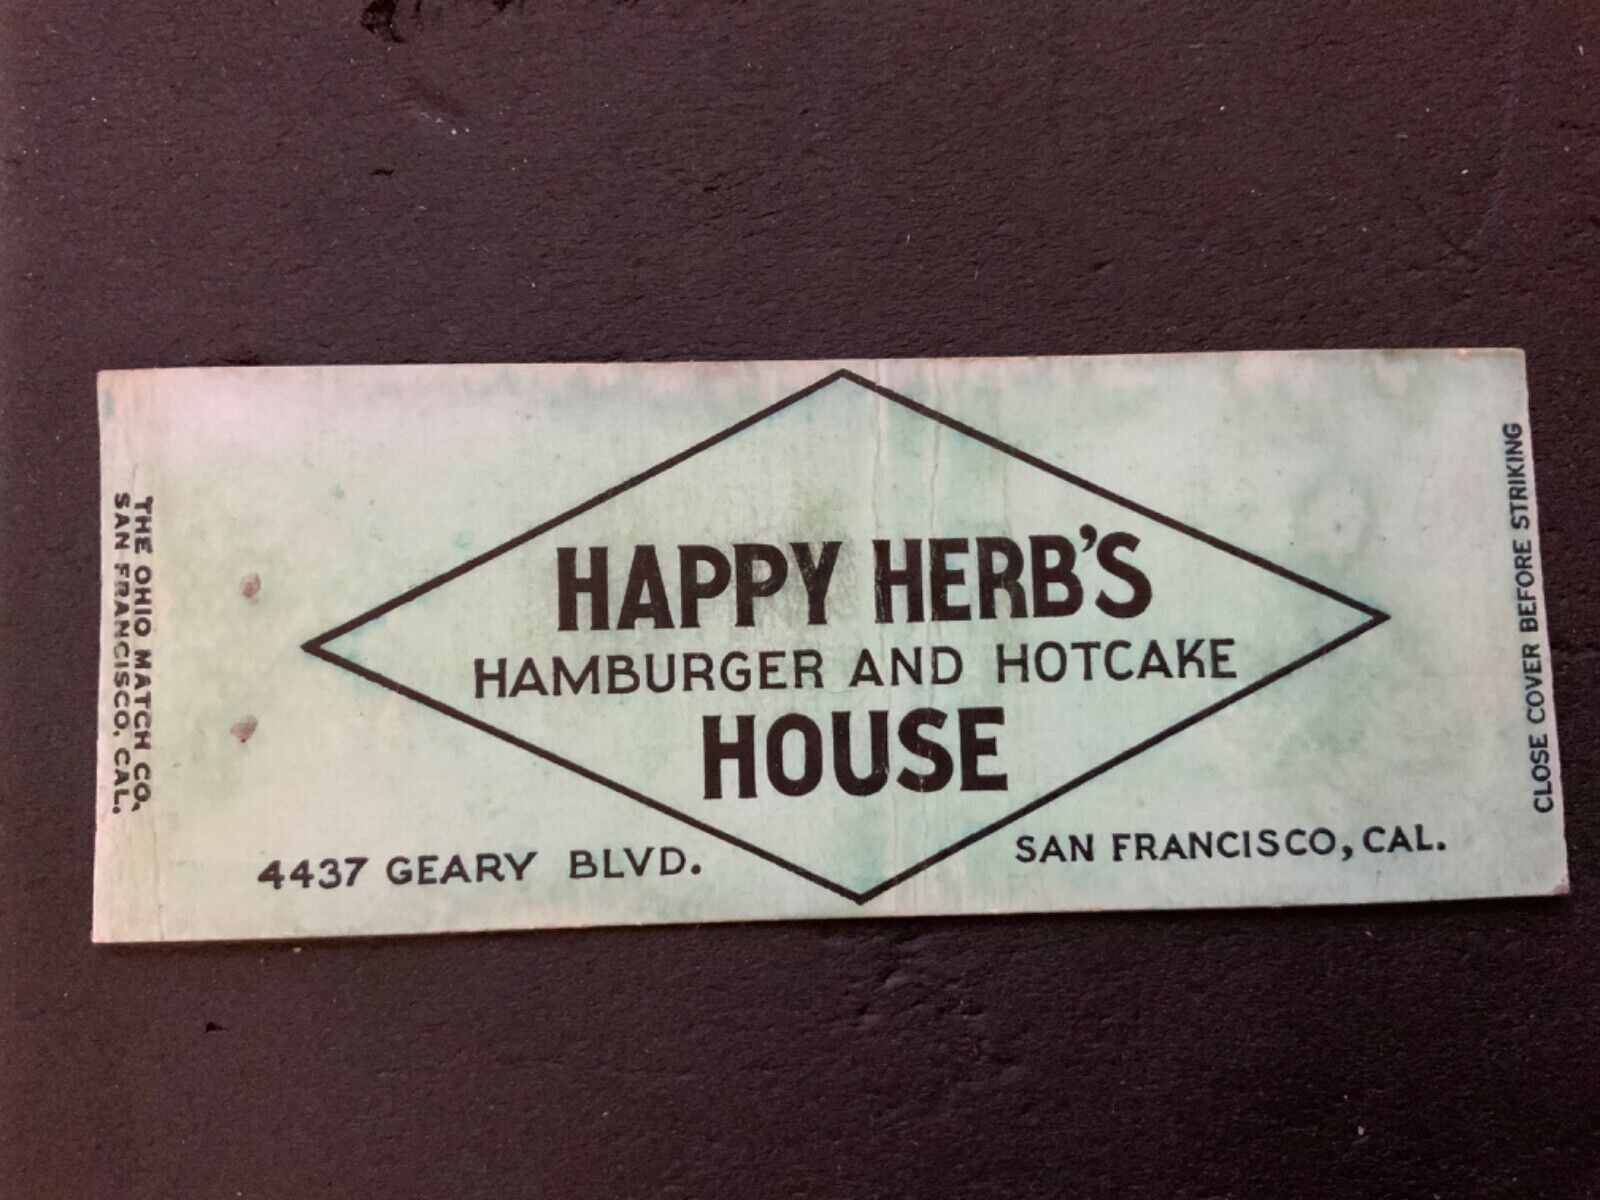 1930s-40s+ MATCHBOOK- HAMBURGERS - HAPPY HERB’S HOUSE - CALIF.  - #2439